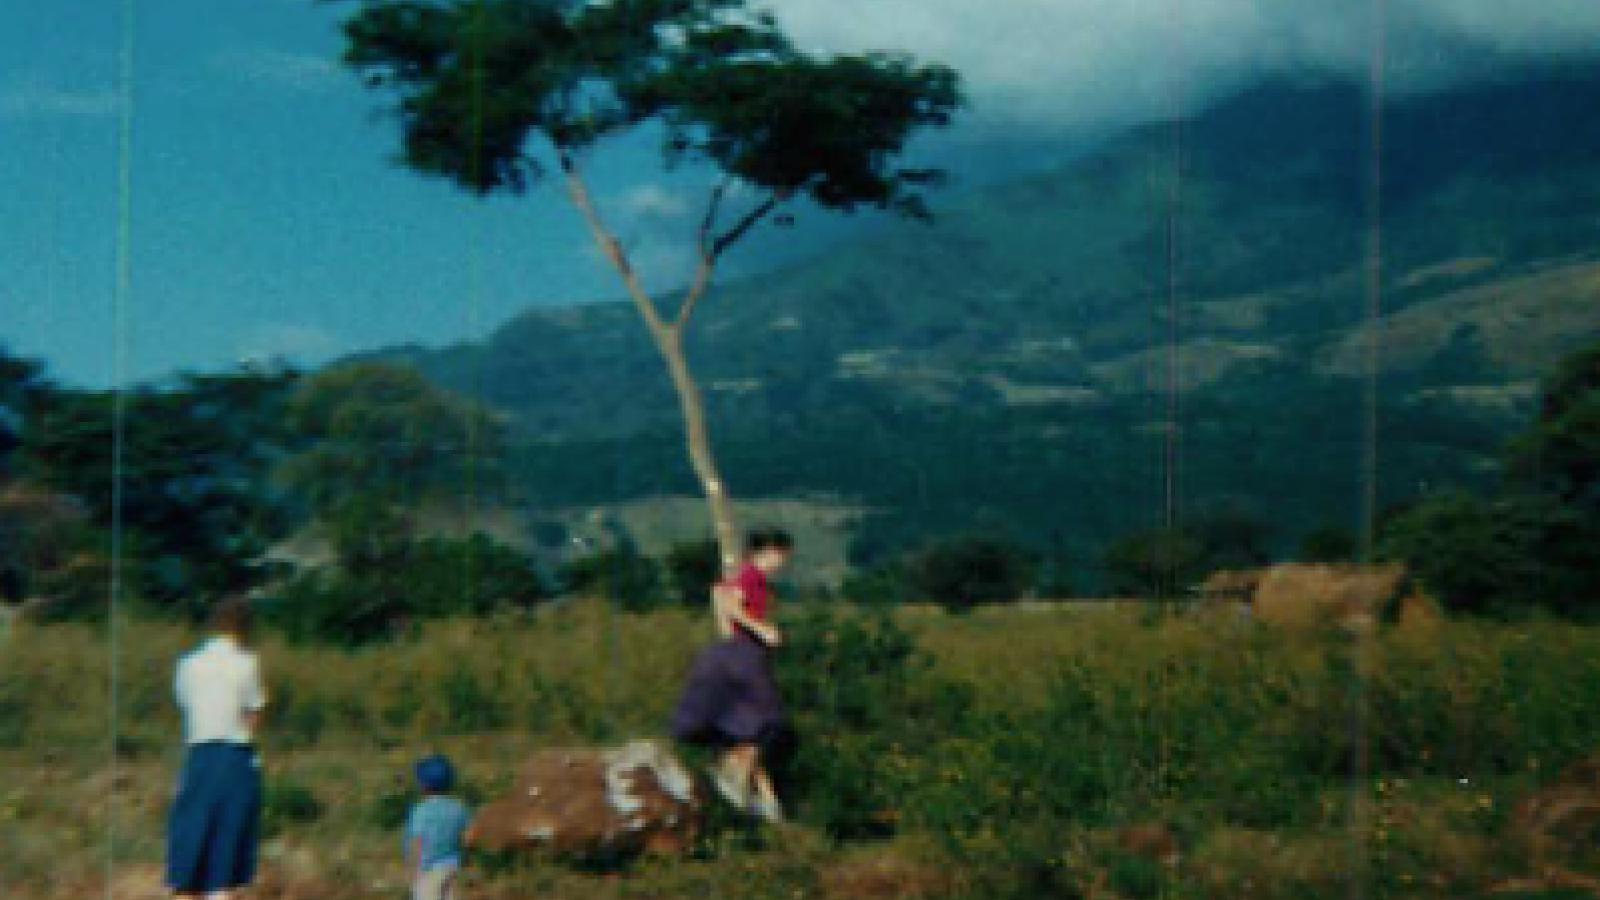 Rural Photograph 2